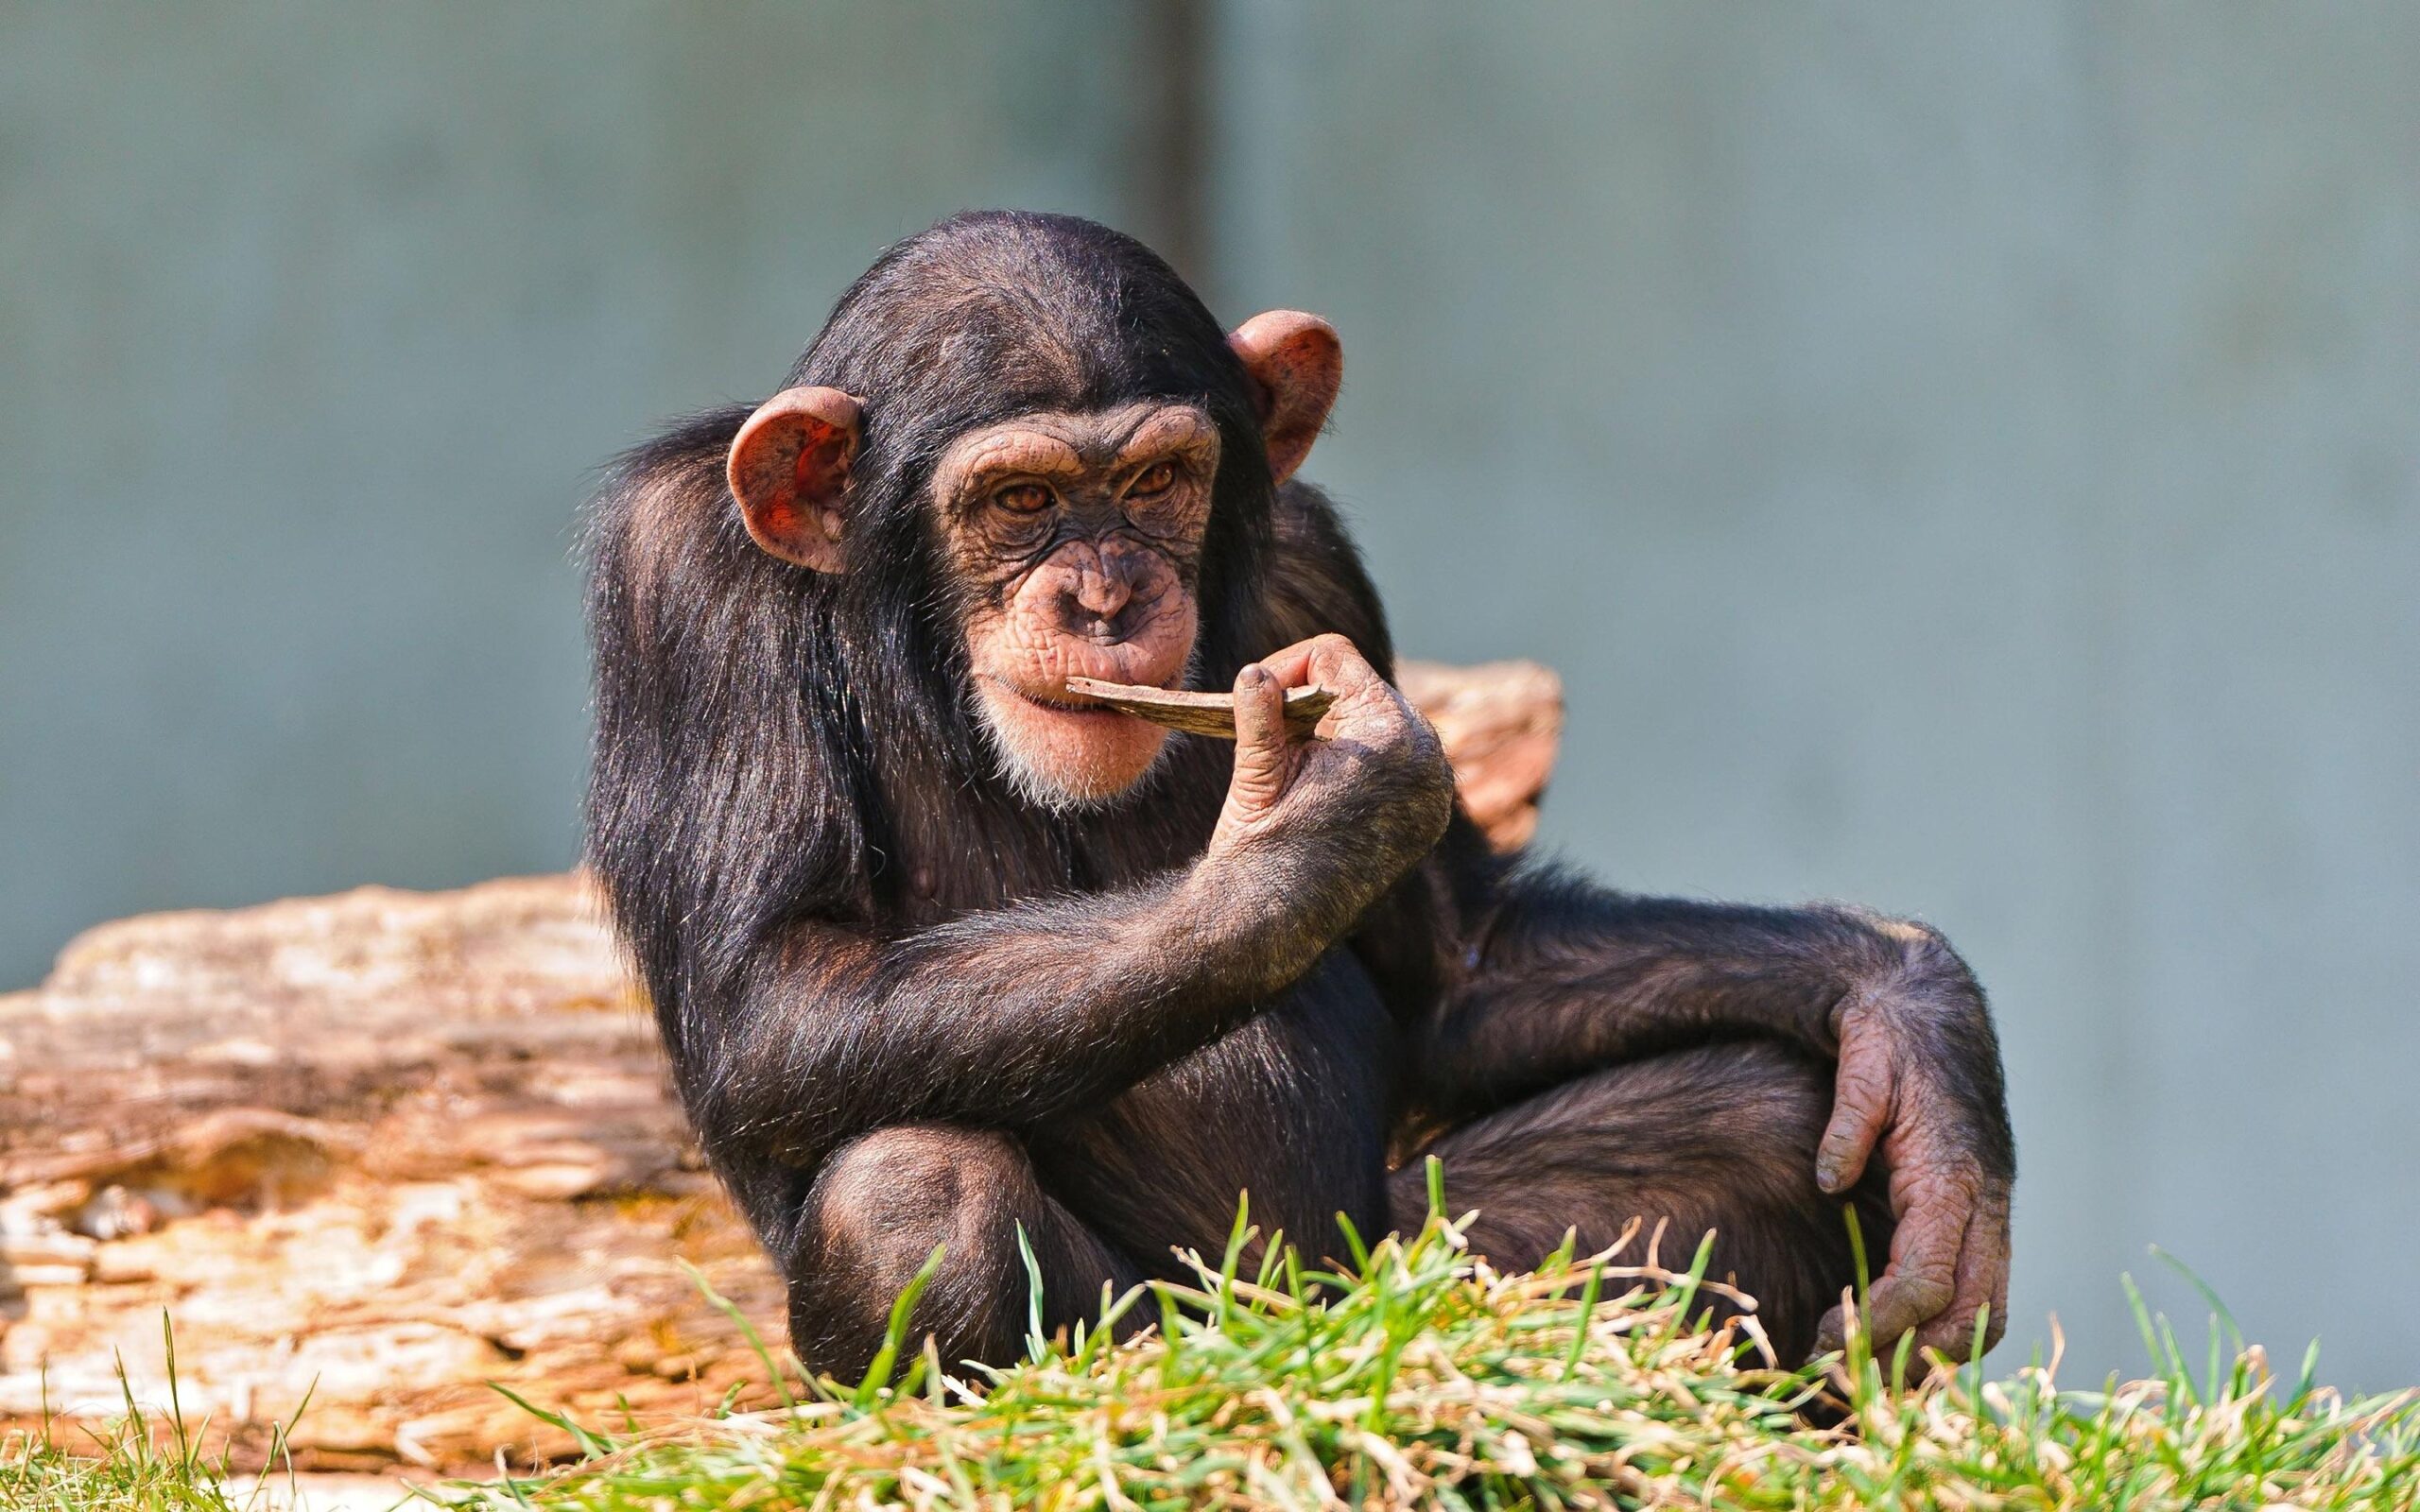 Chimpanzee Hd Wallpapers Free Download, Chimpanzee, Animal